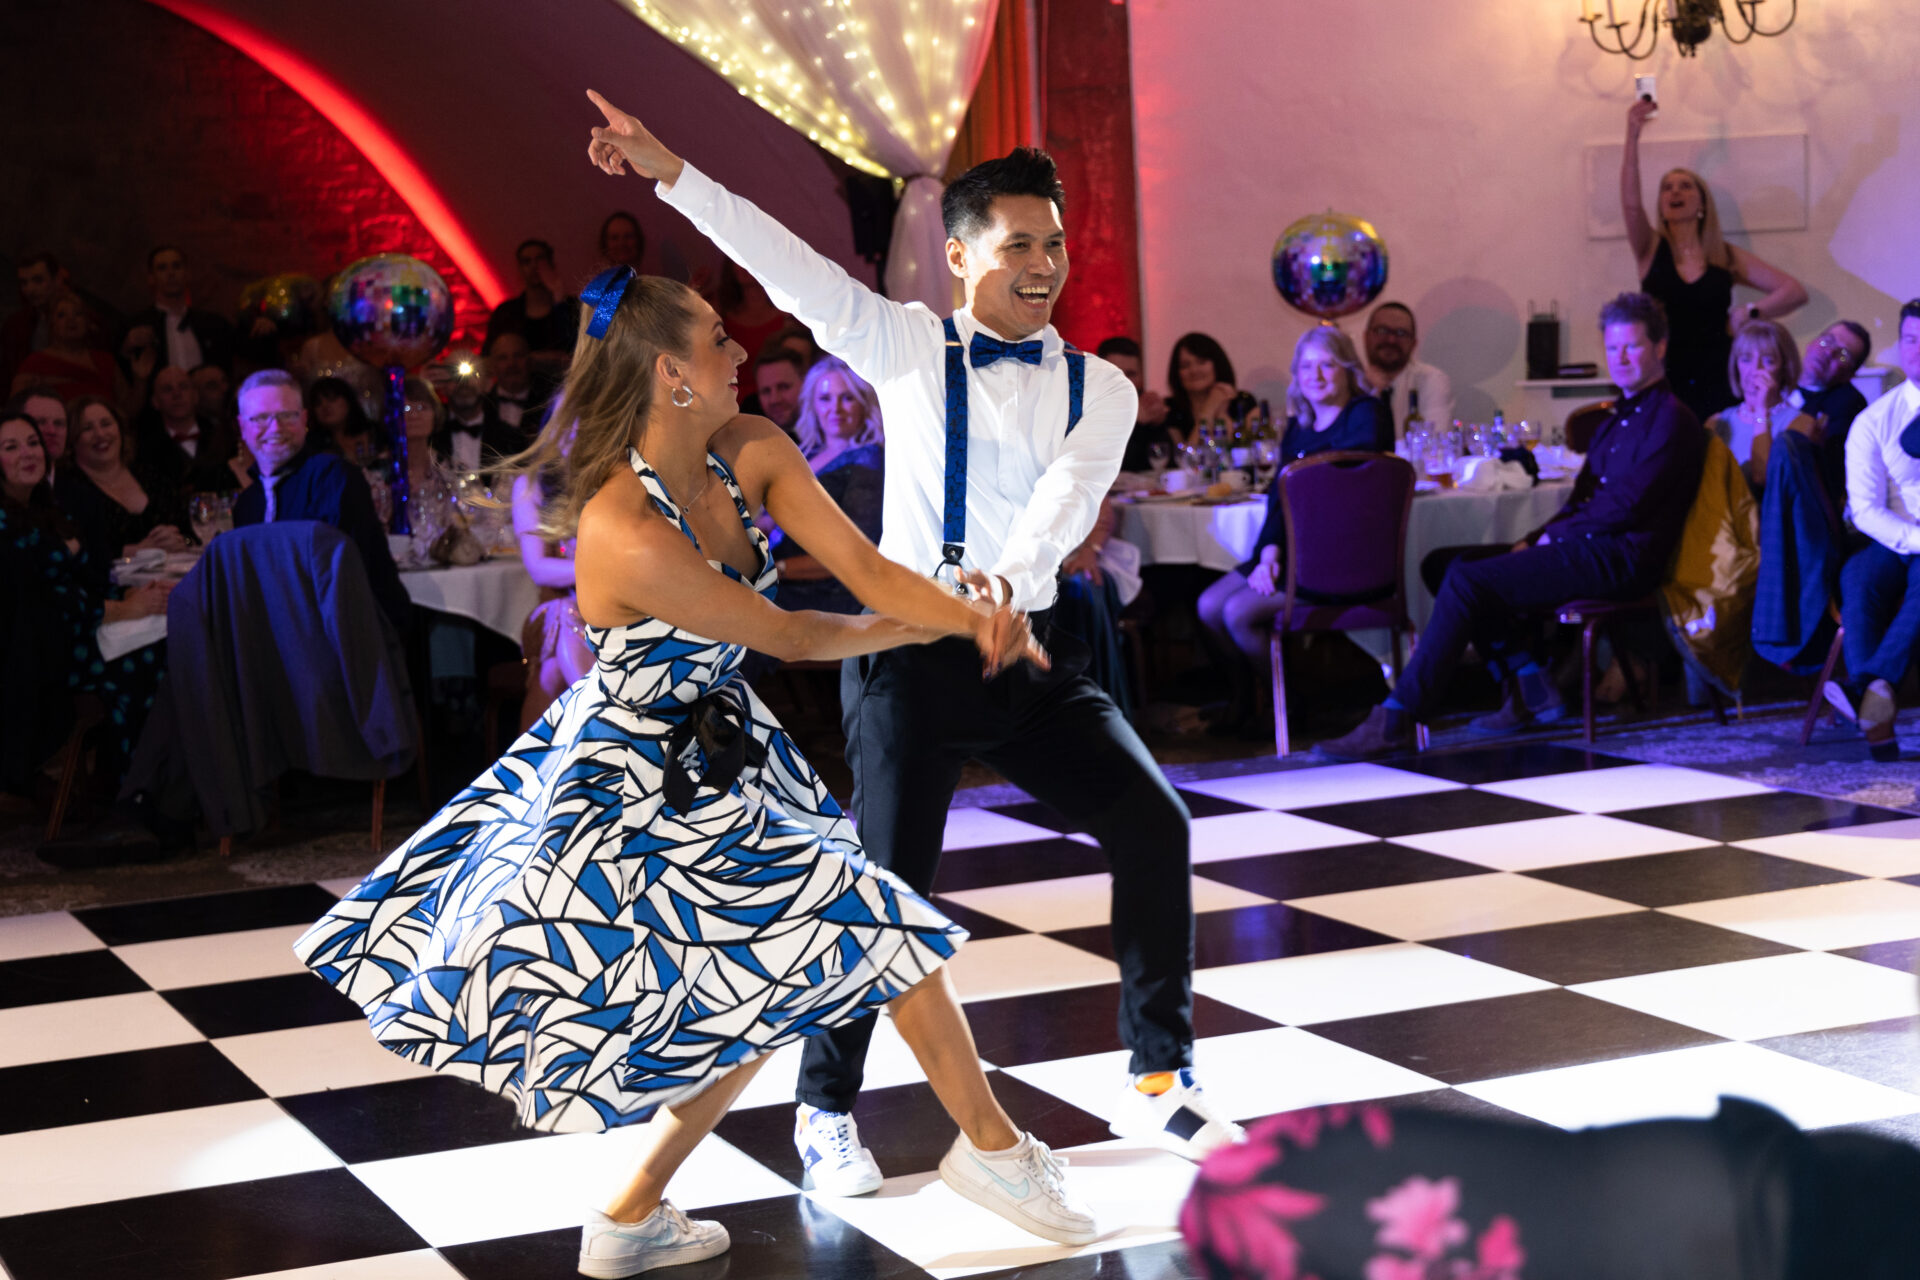 Two people dancing on a dance floor